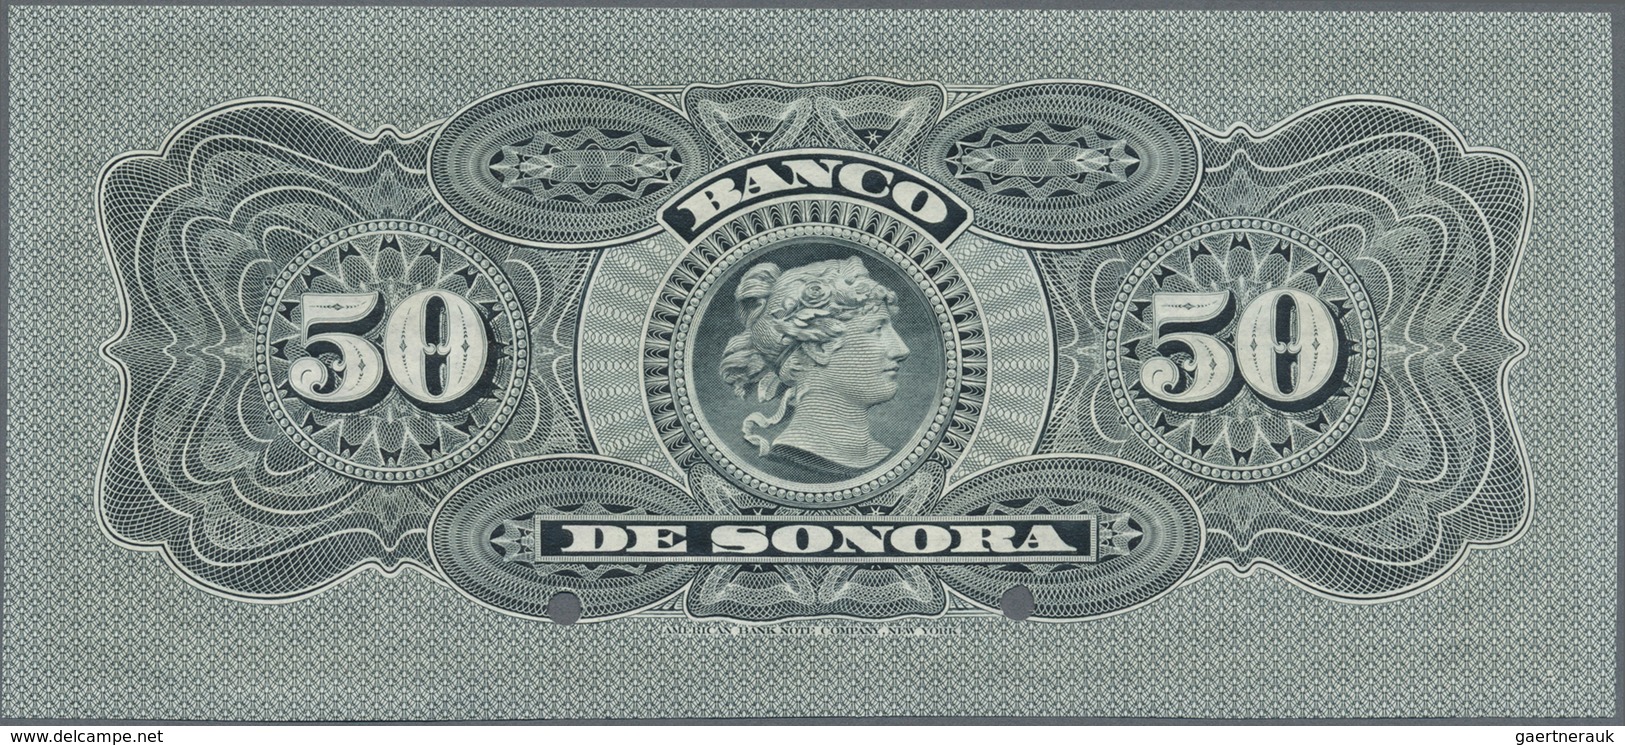 Mexico: El Banco De Sonora 50 Pesos 1899-1911 SPECIMEN, P.S422s, Punch Hole Cancellation And Red Ove - Mexico